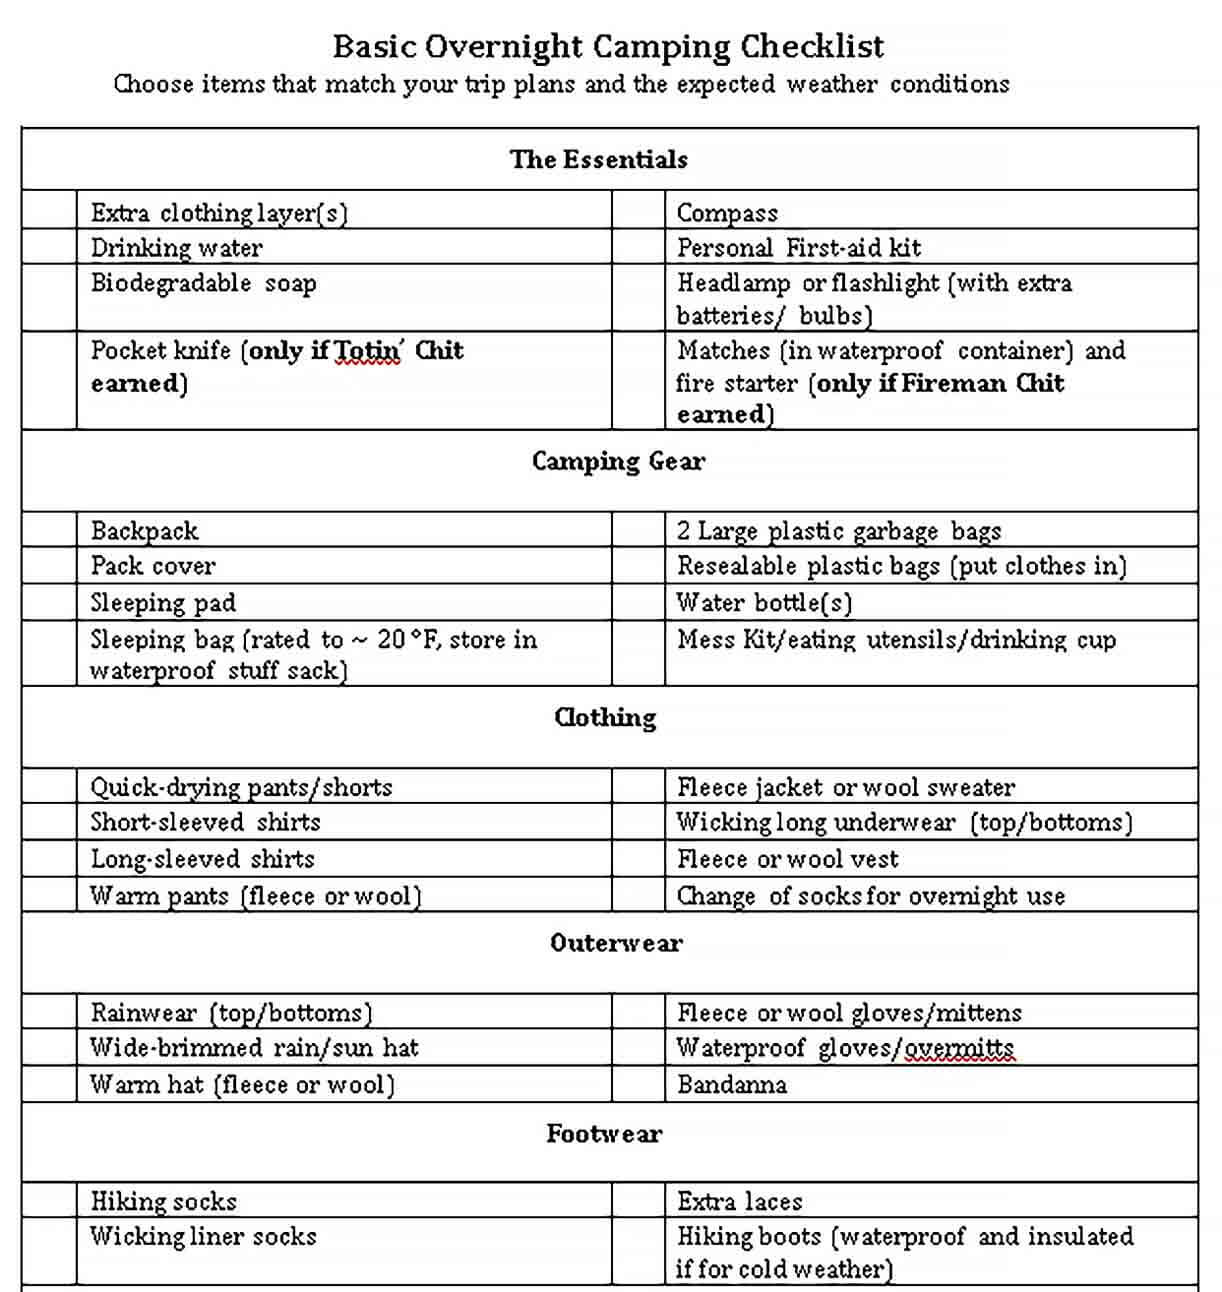 Sample Basic Overnight Camping Checklist PDF